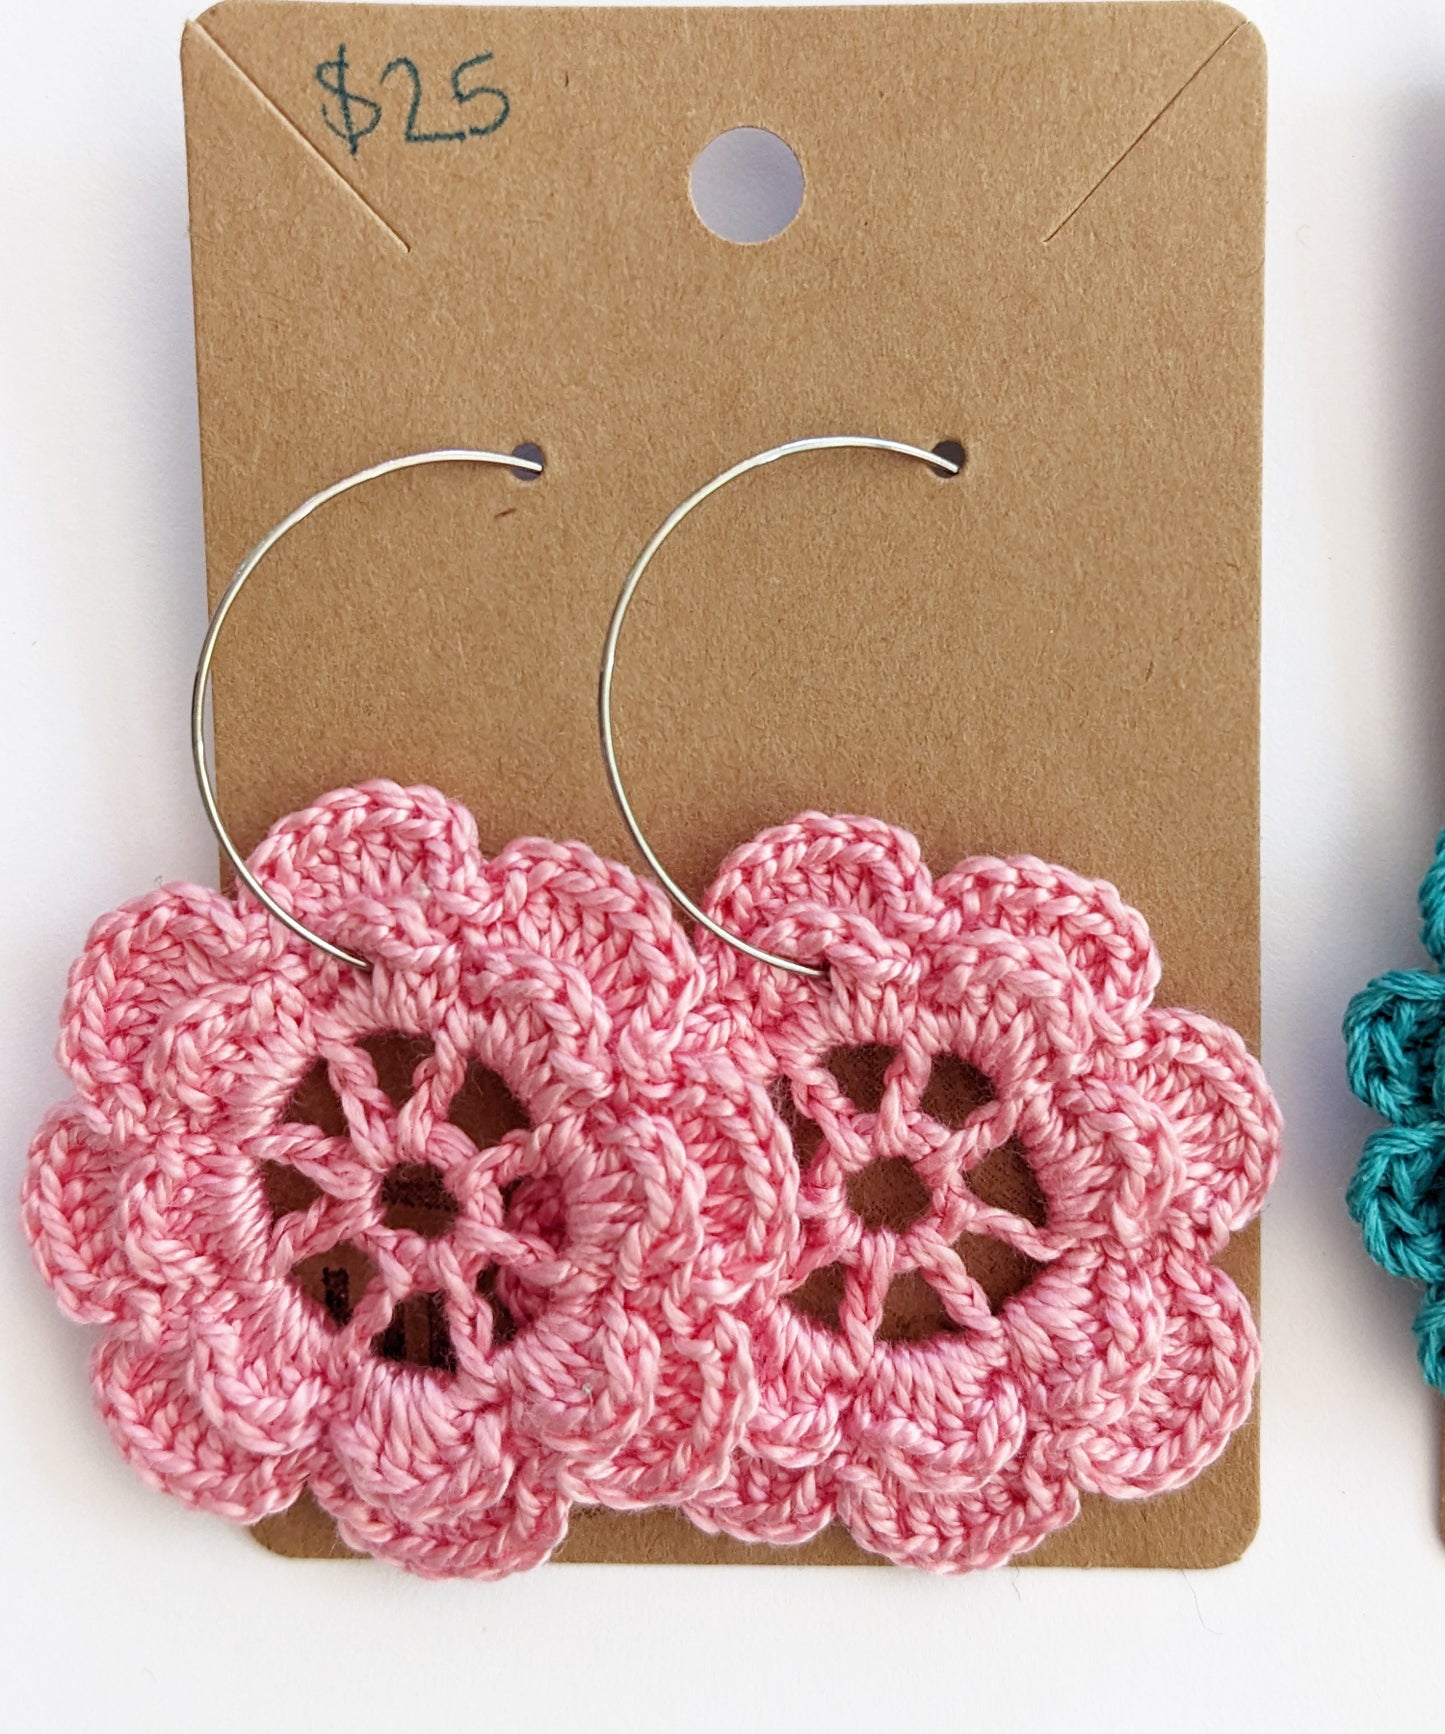 Sterling Silver Crochet Flower Earrings - Choose your favorite flower